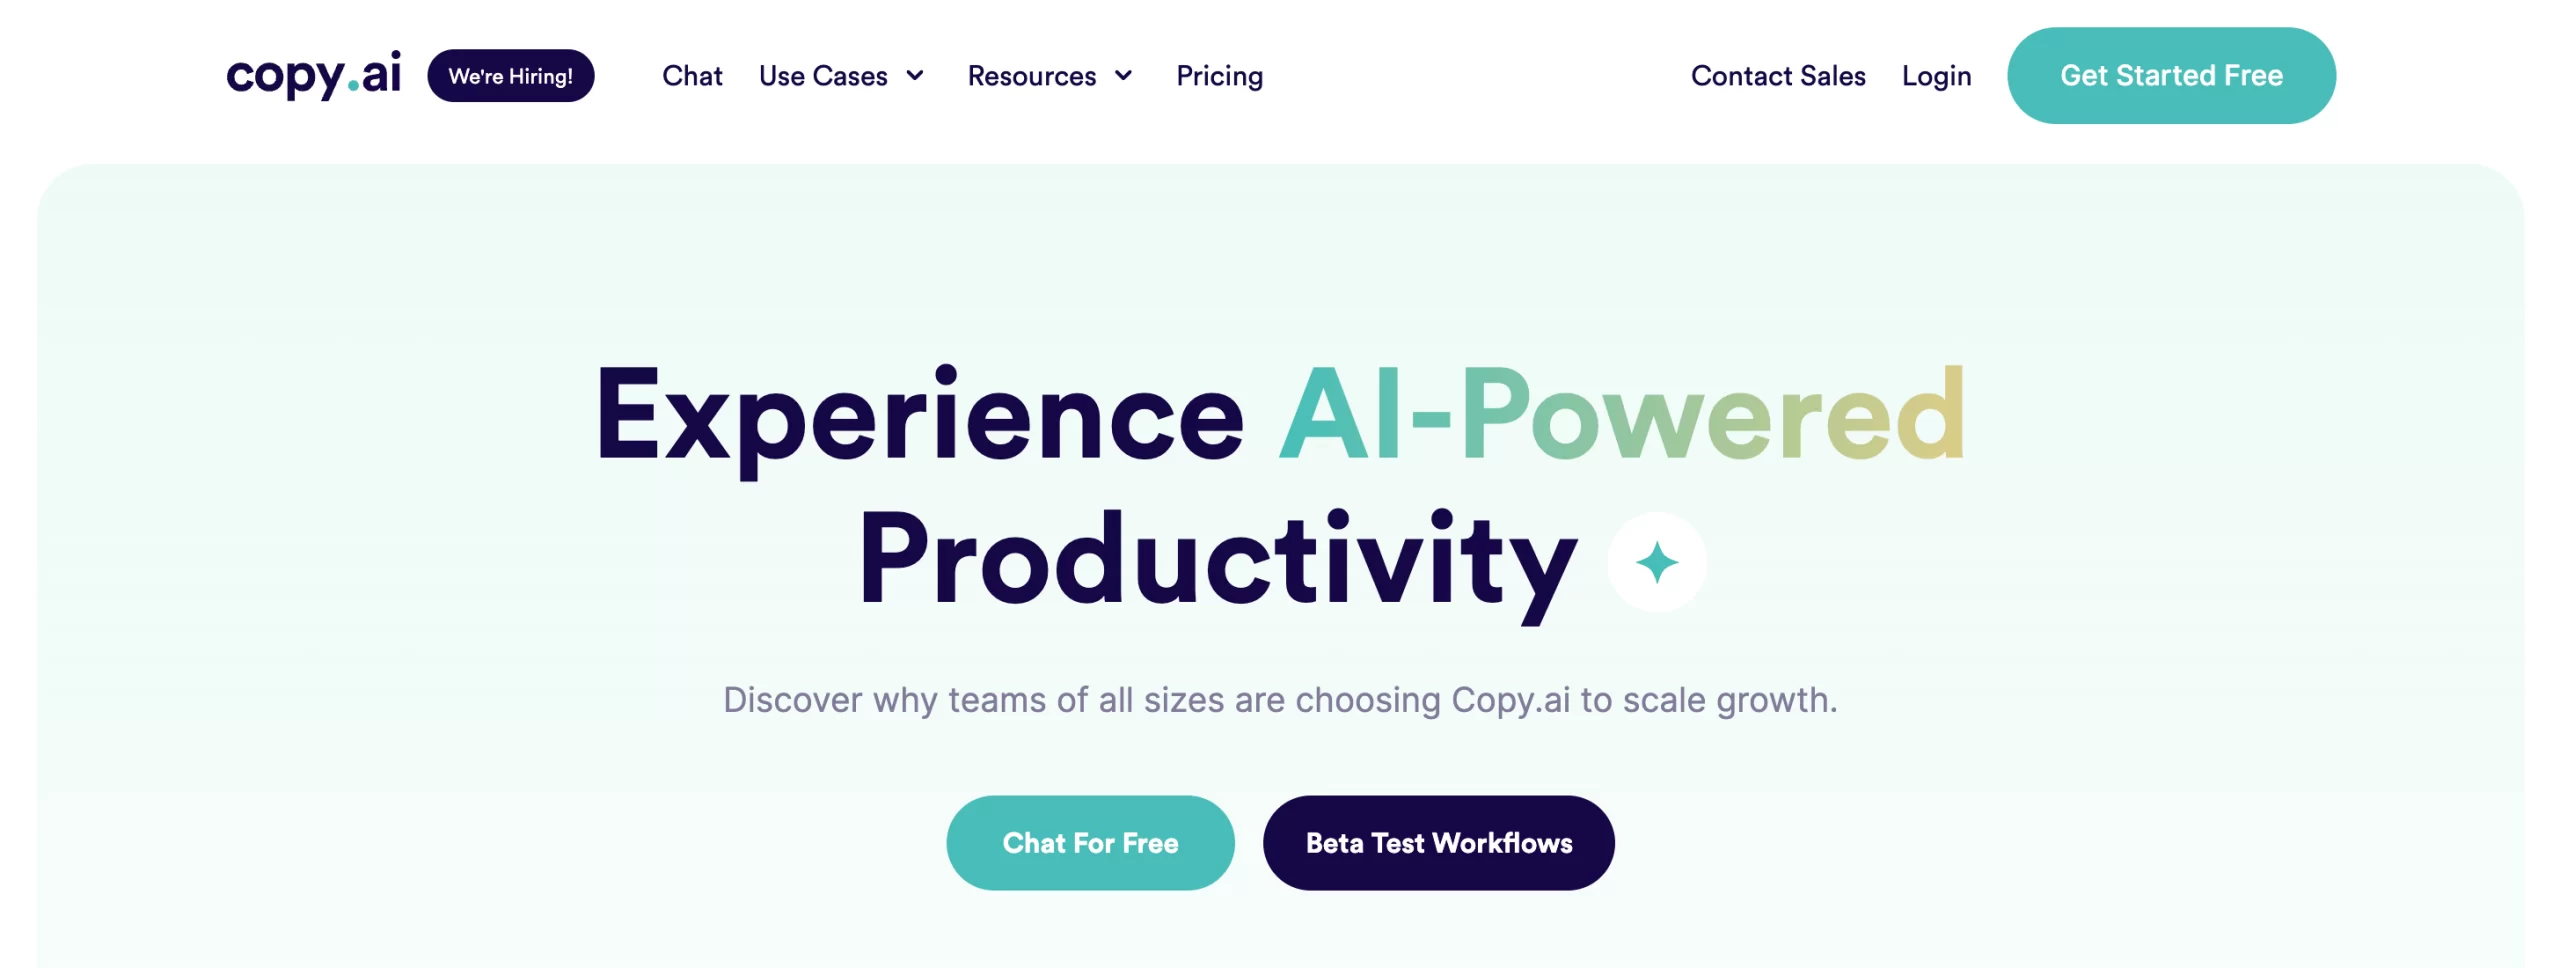 Copy AI's website homepage